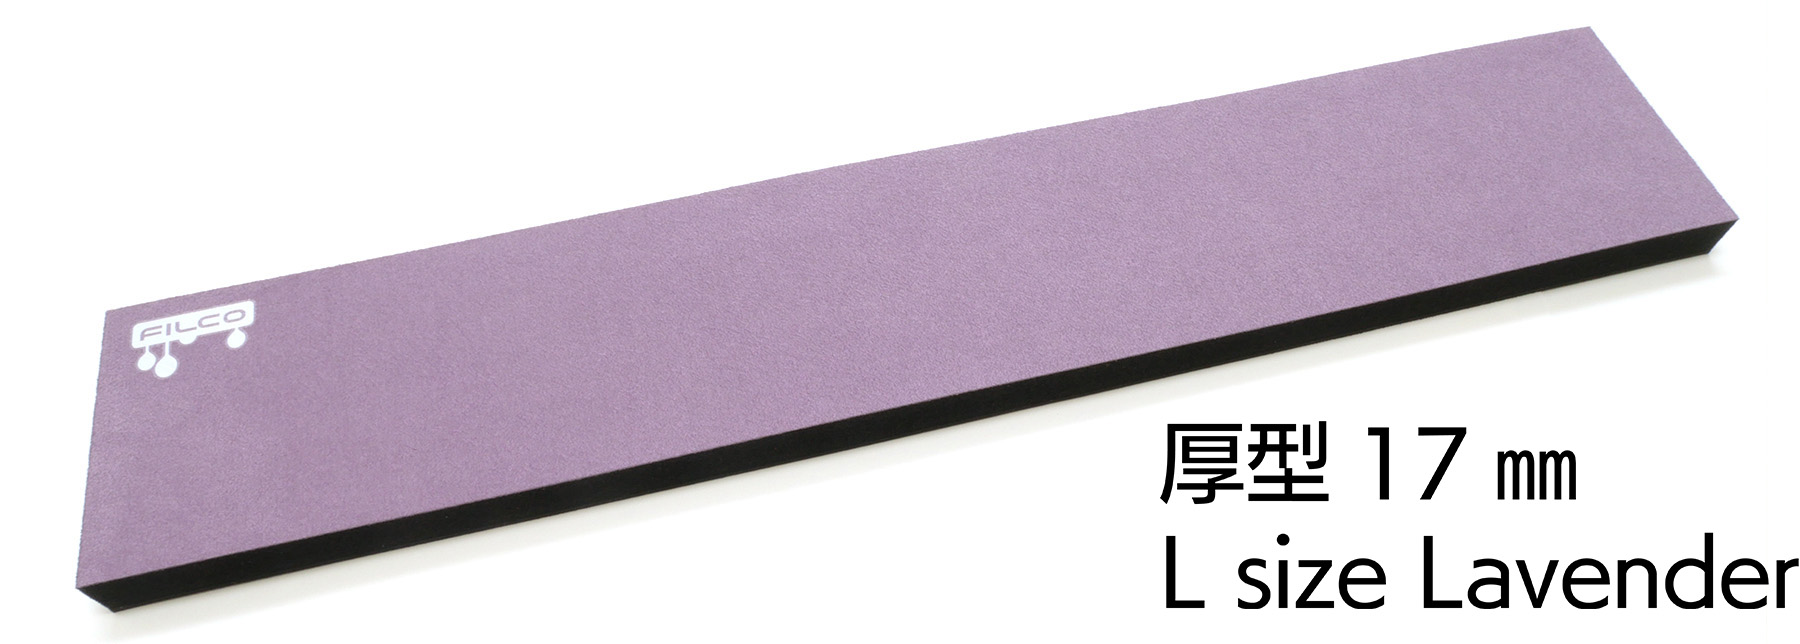 FILCO Majestouch Wrist Rest "Macaron" 厚型17mm・Lサイズ・Lavender【アウトレット品】